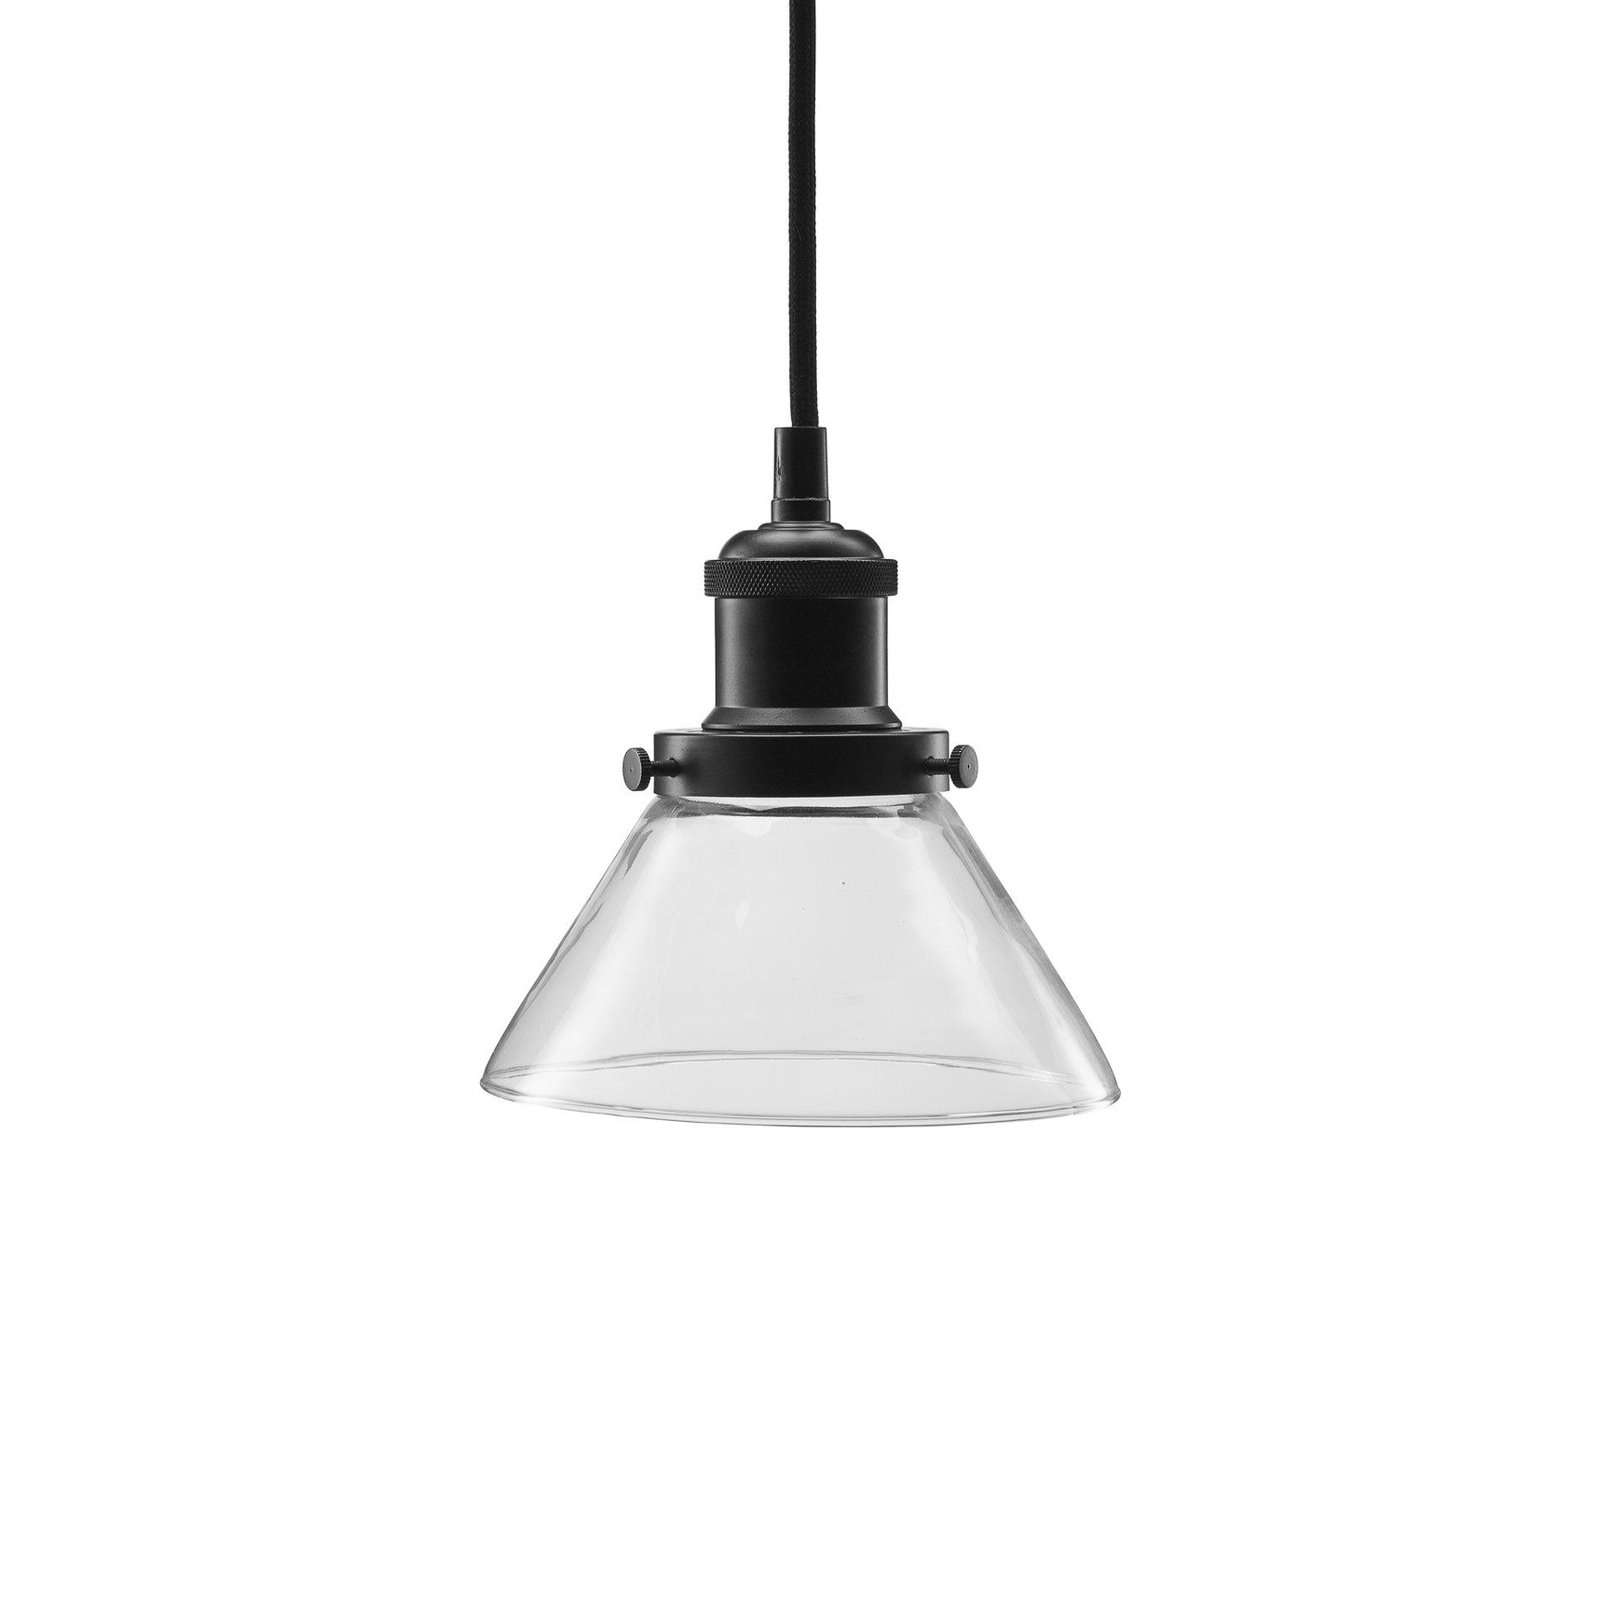 PR Home hanglamp August, helder, Ø 15 cm